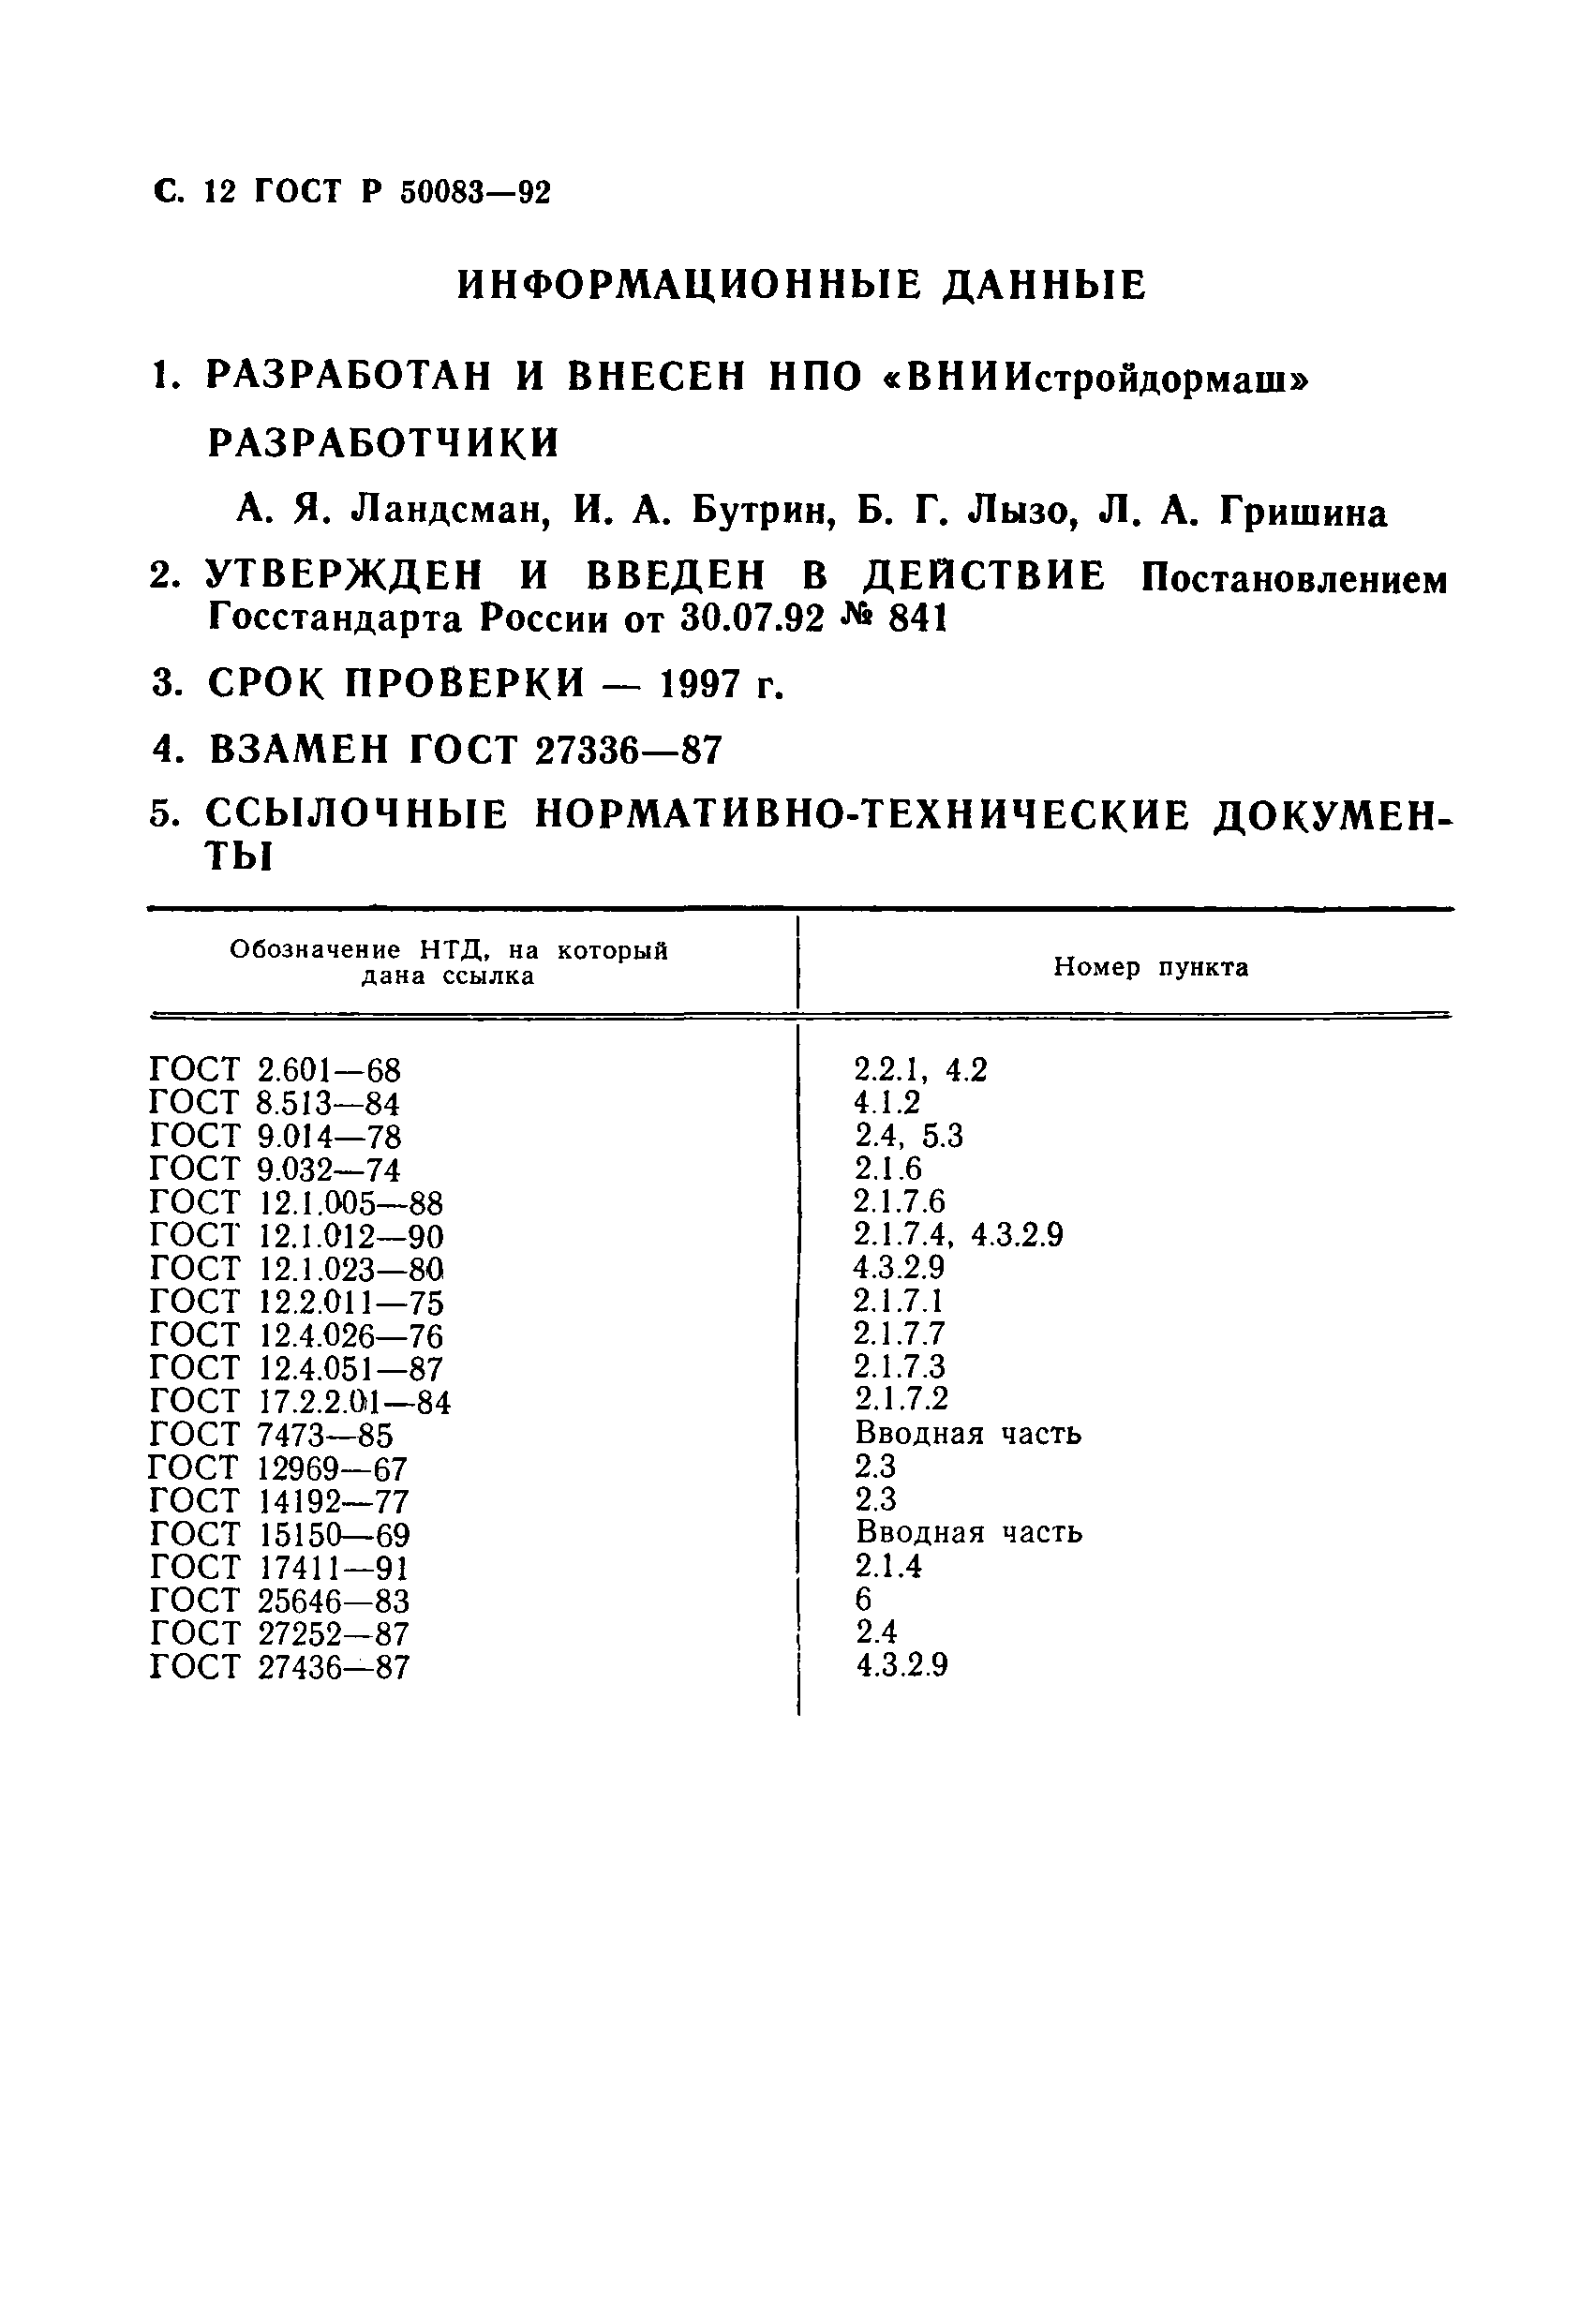 ГОСТ Р 50083-92